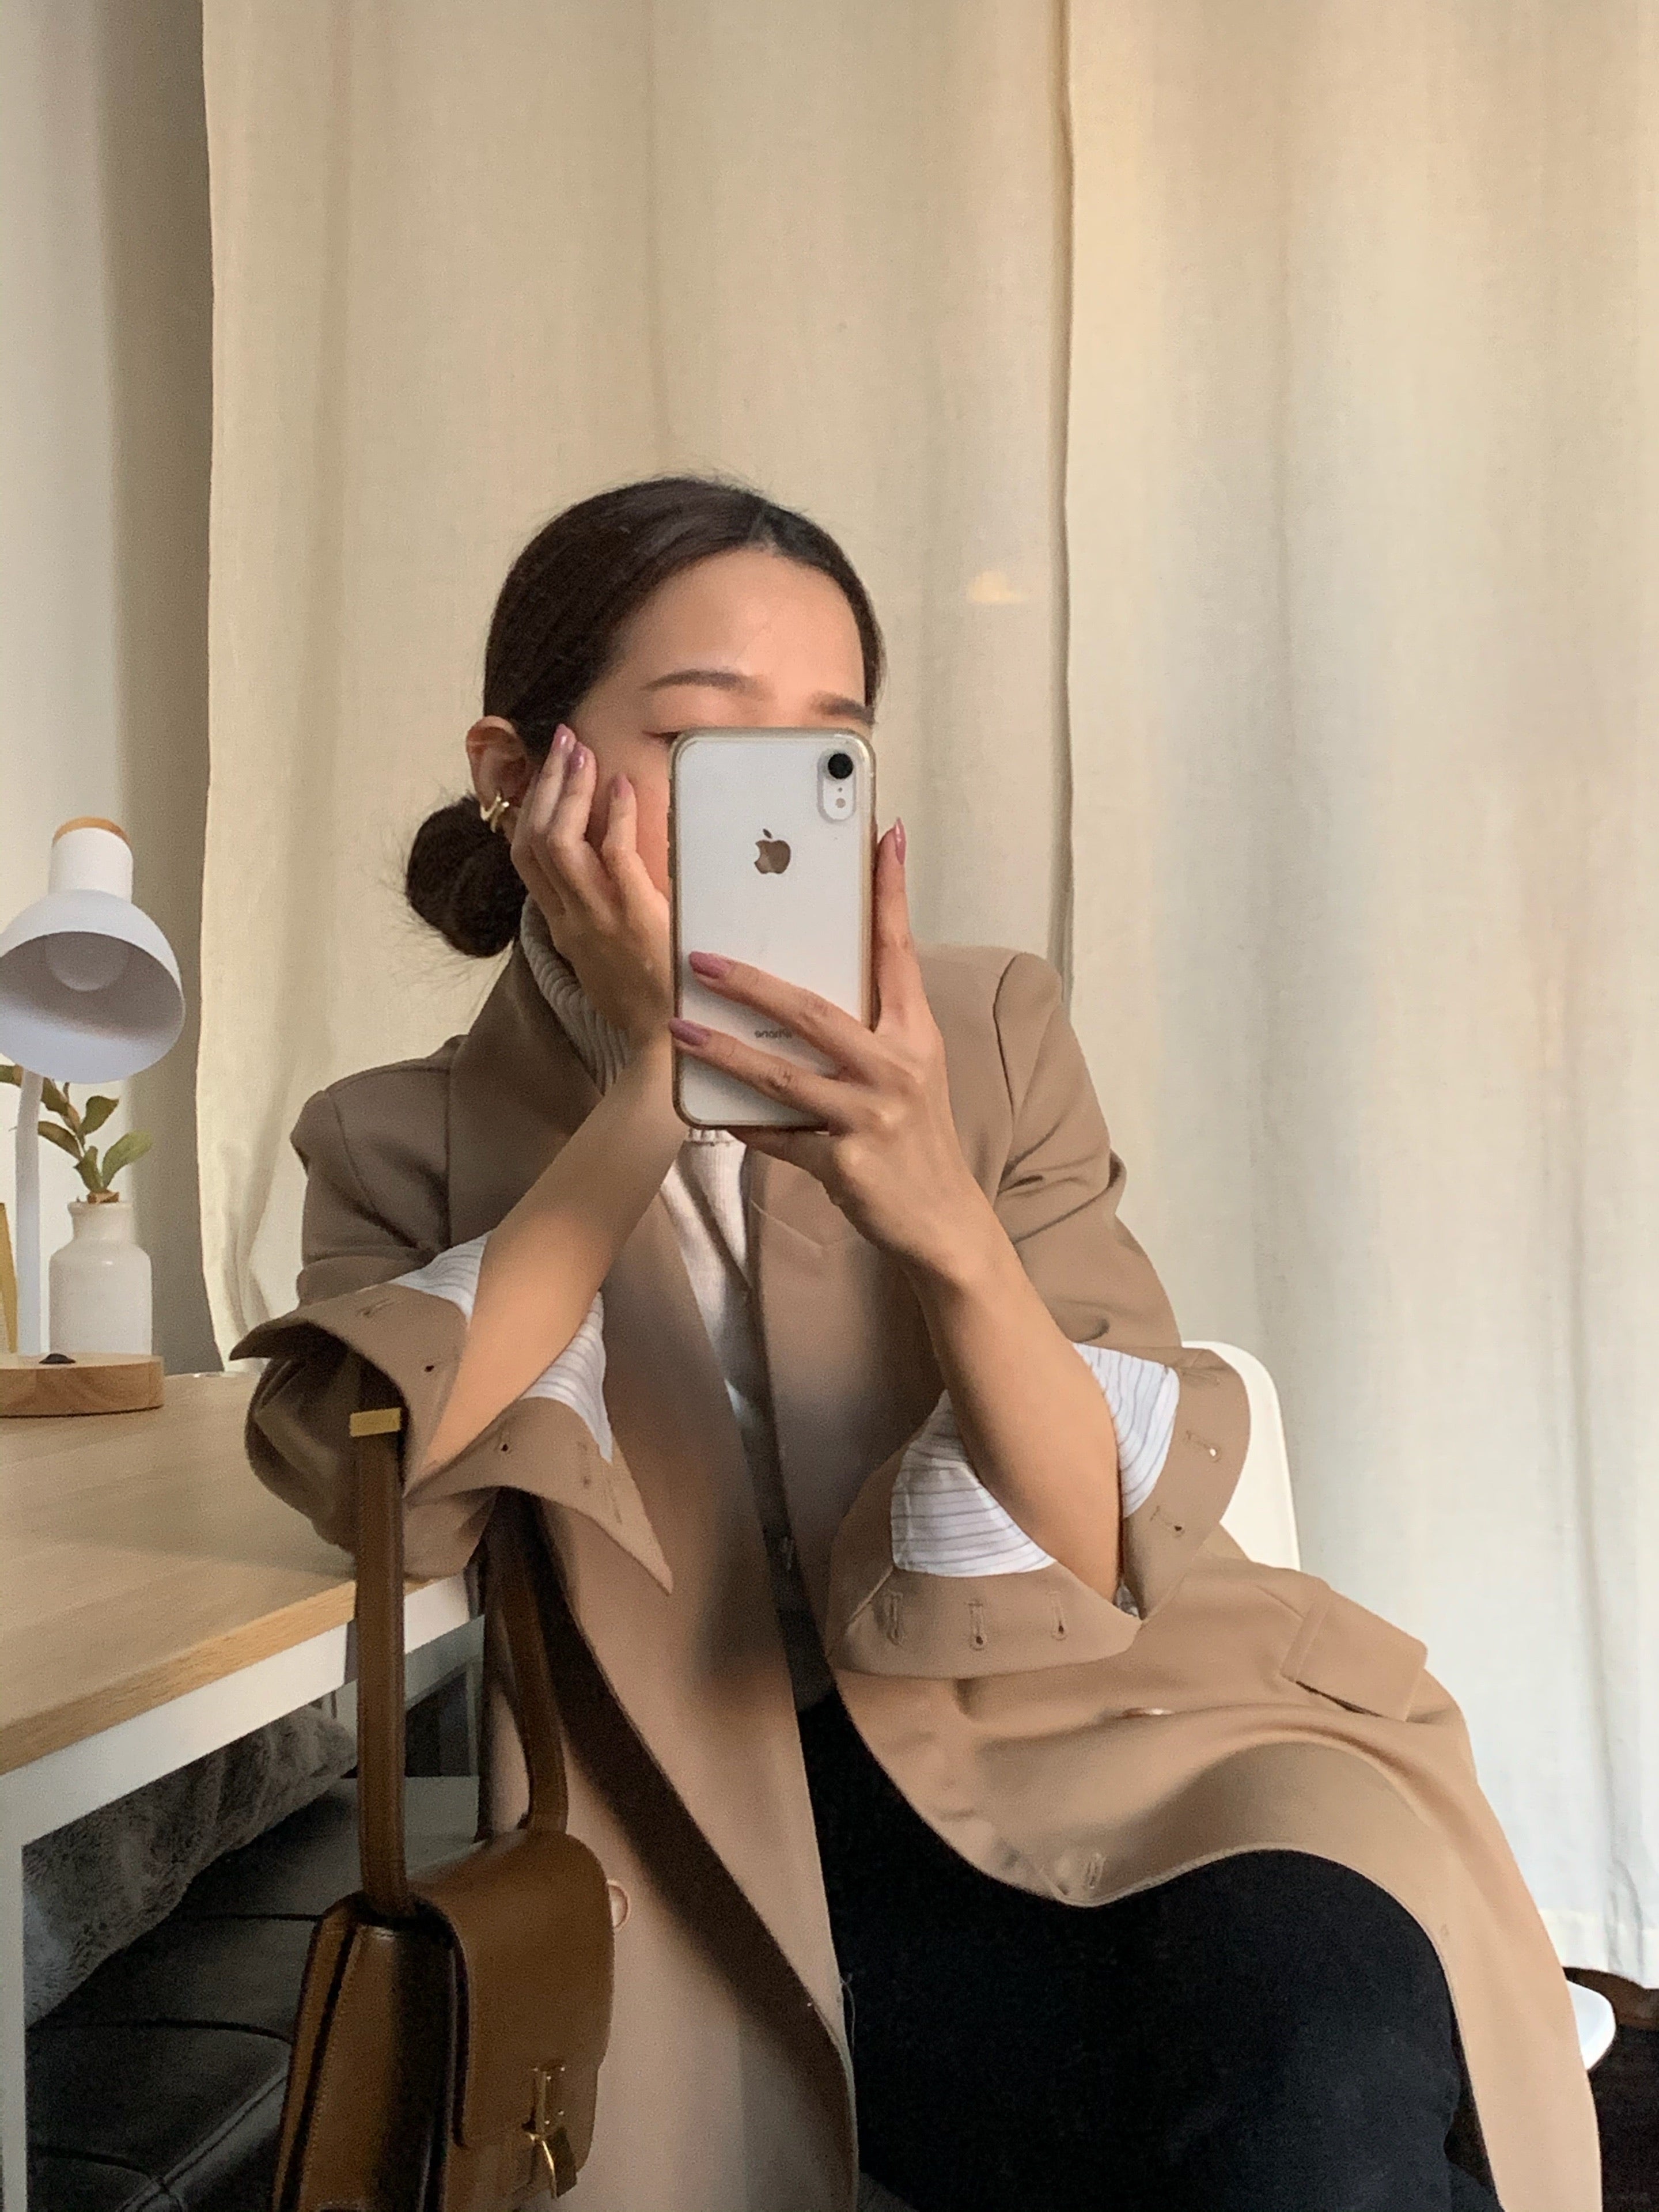 [Korean Style] Alexia Double Breasted Fit Blazer Coat